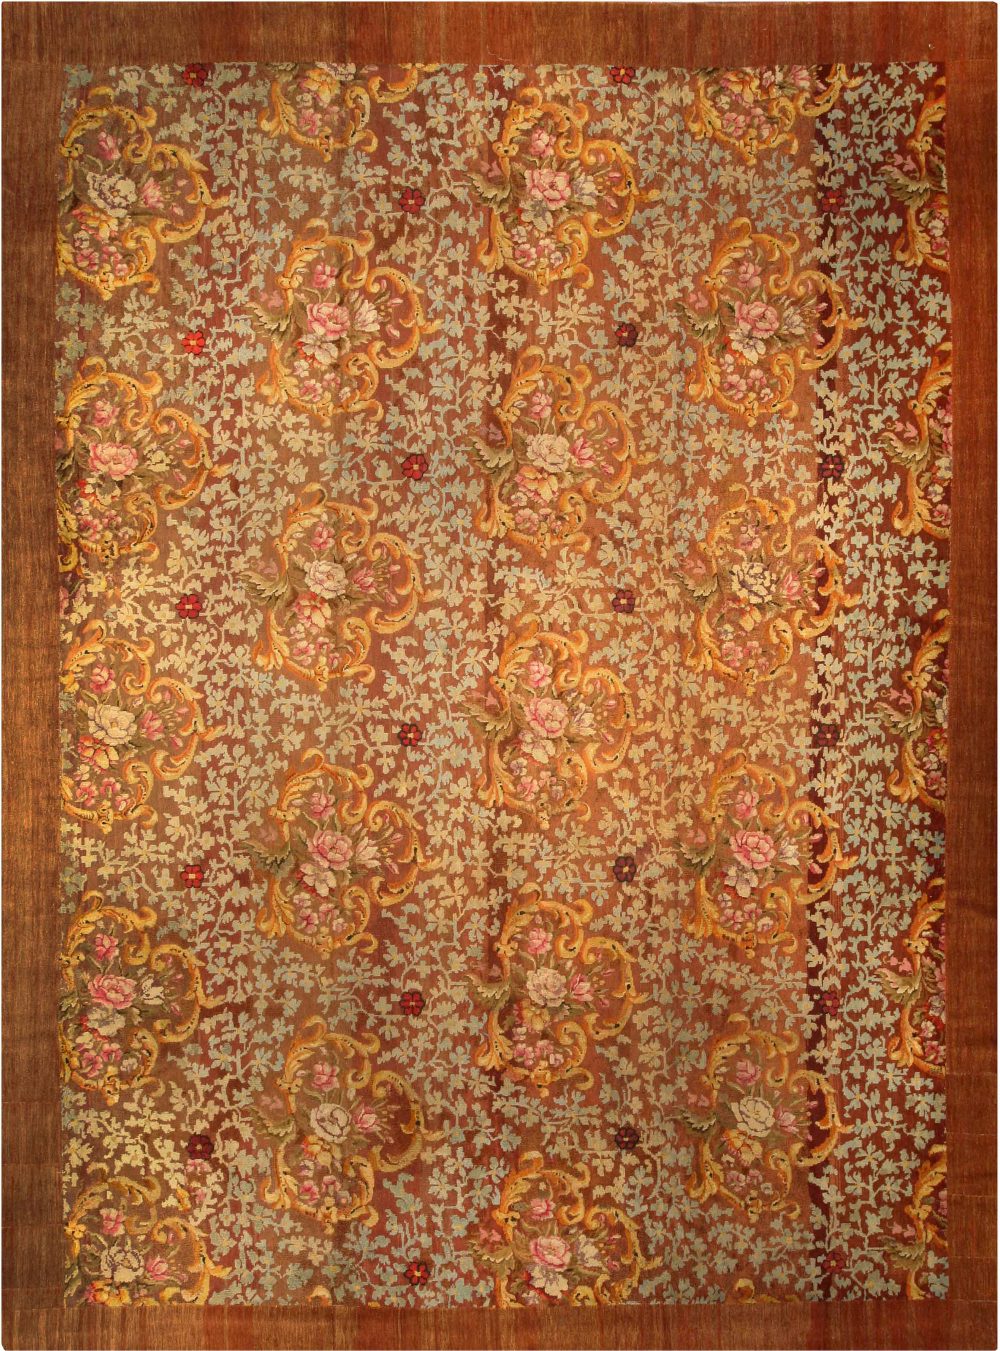 Authentic 19th Century Savonnerie Handmade Wool Rug BB6679